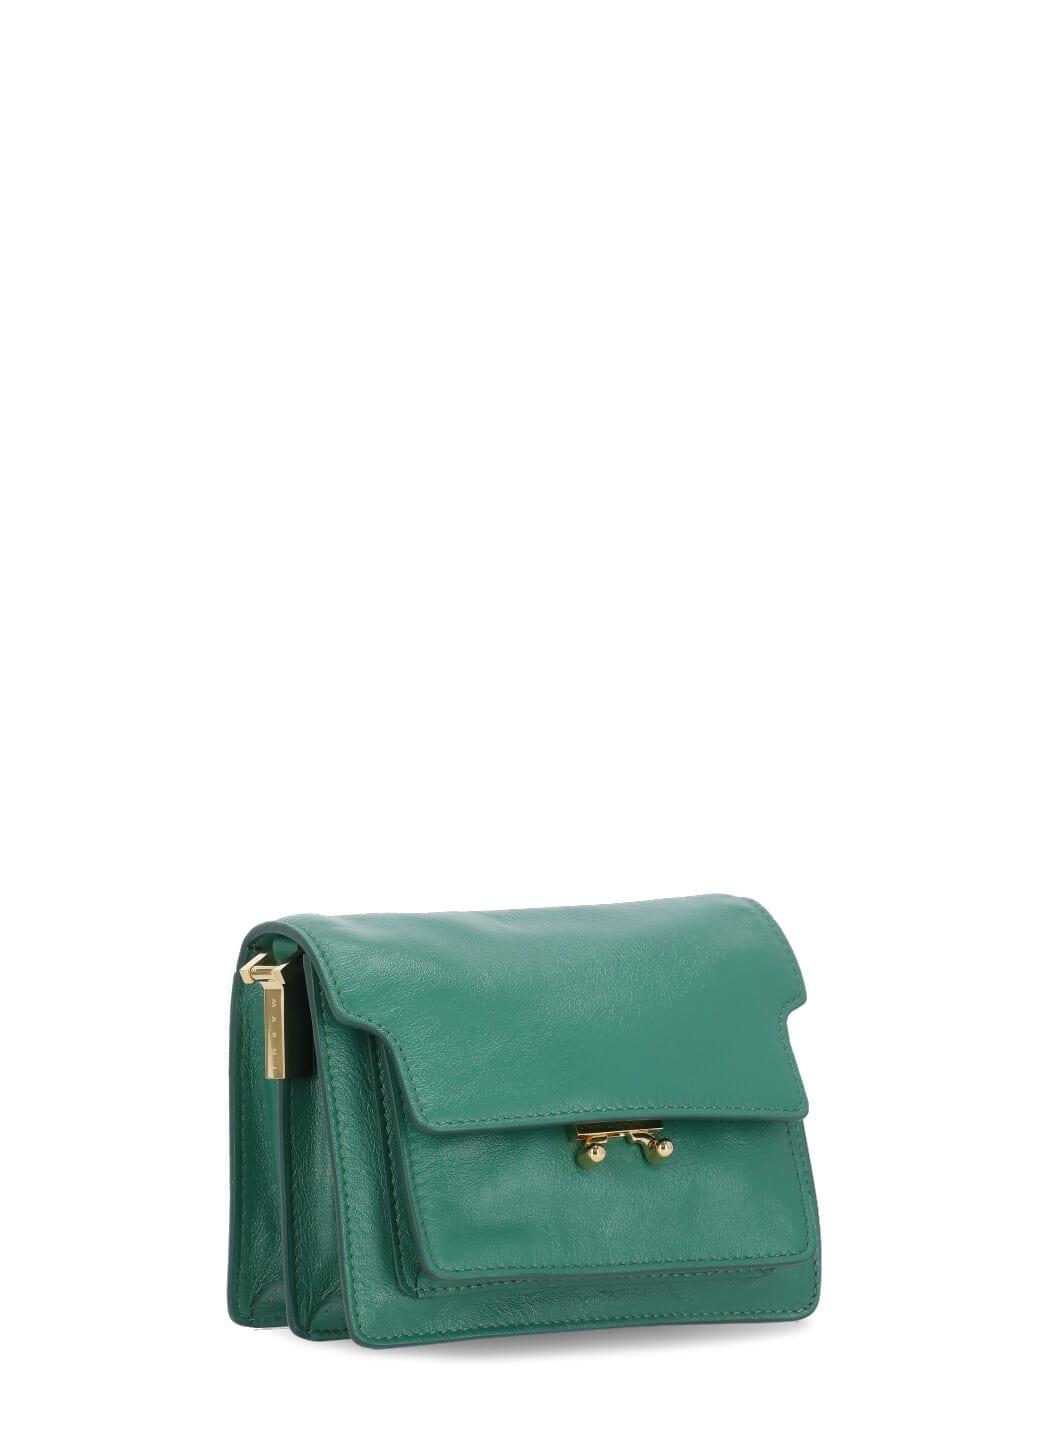 Marni Mini Trunk Soft Leather Shoulder Bag in Green